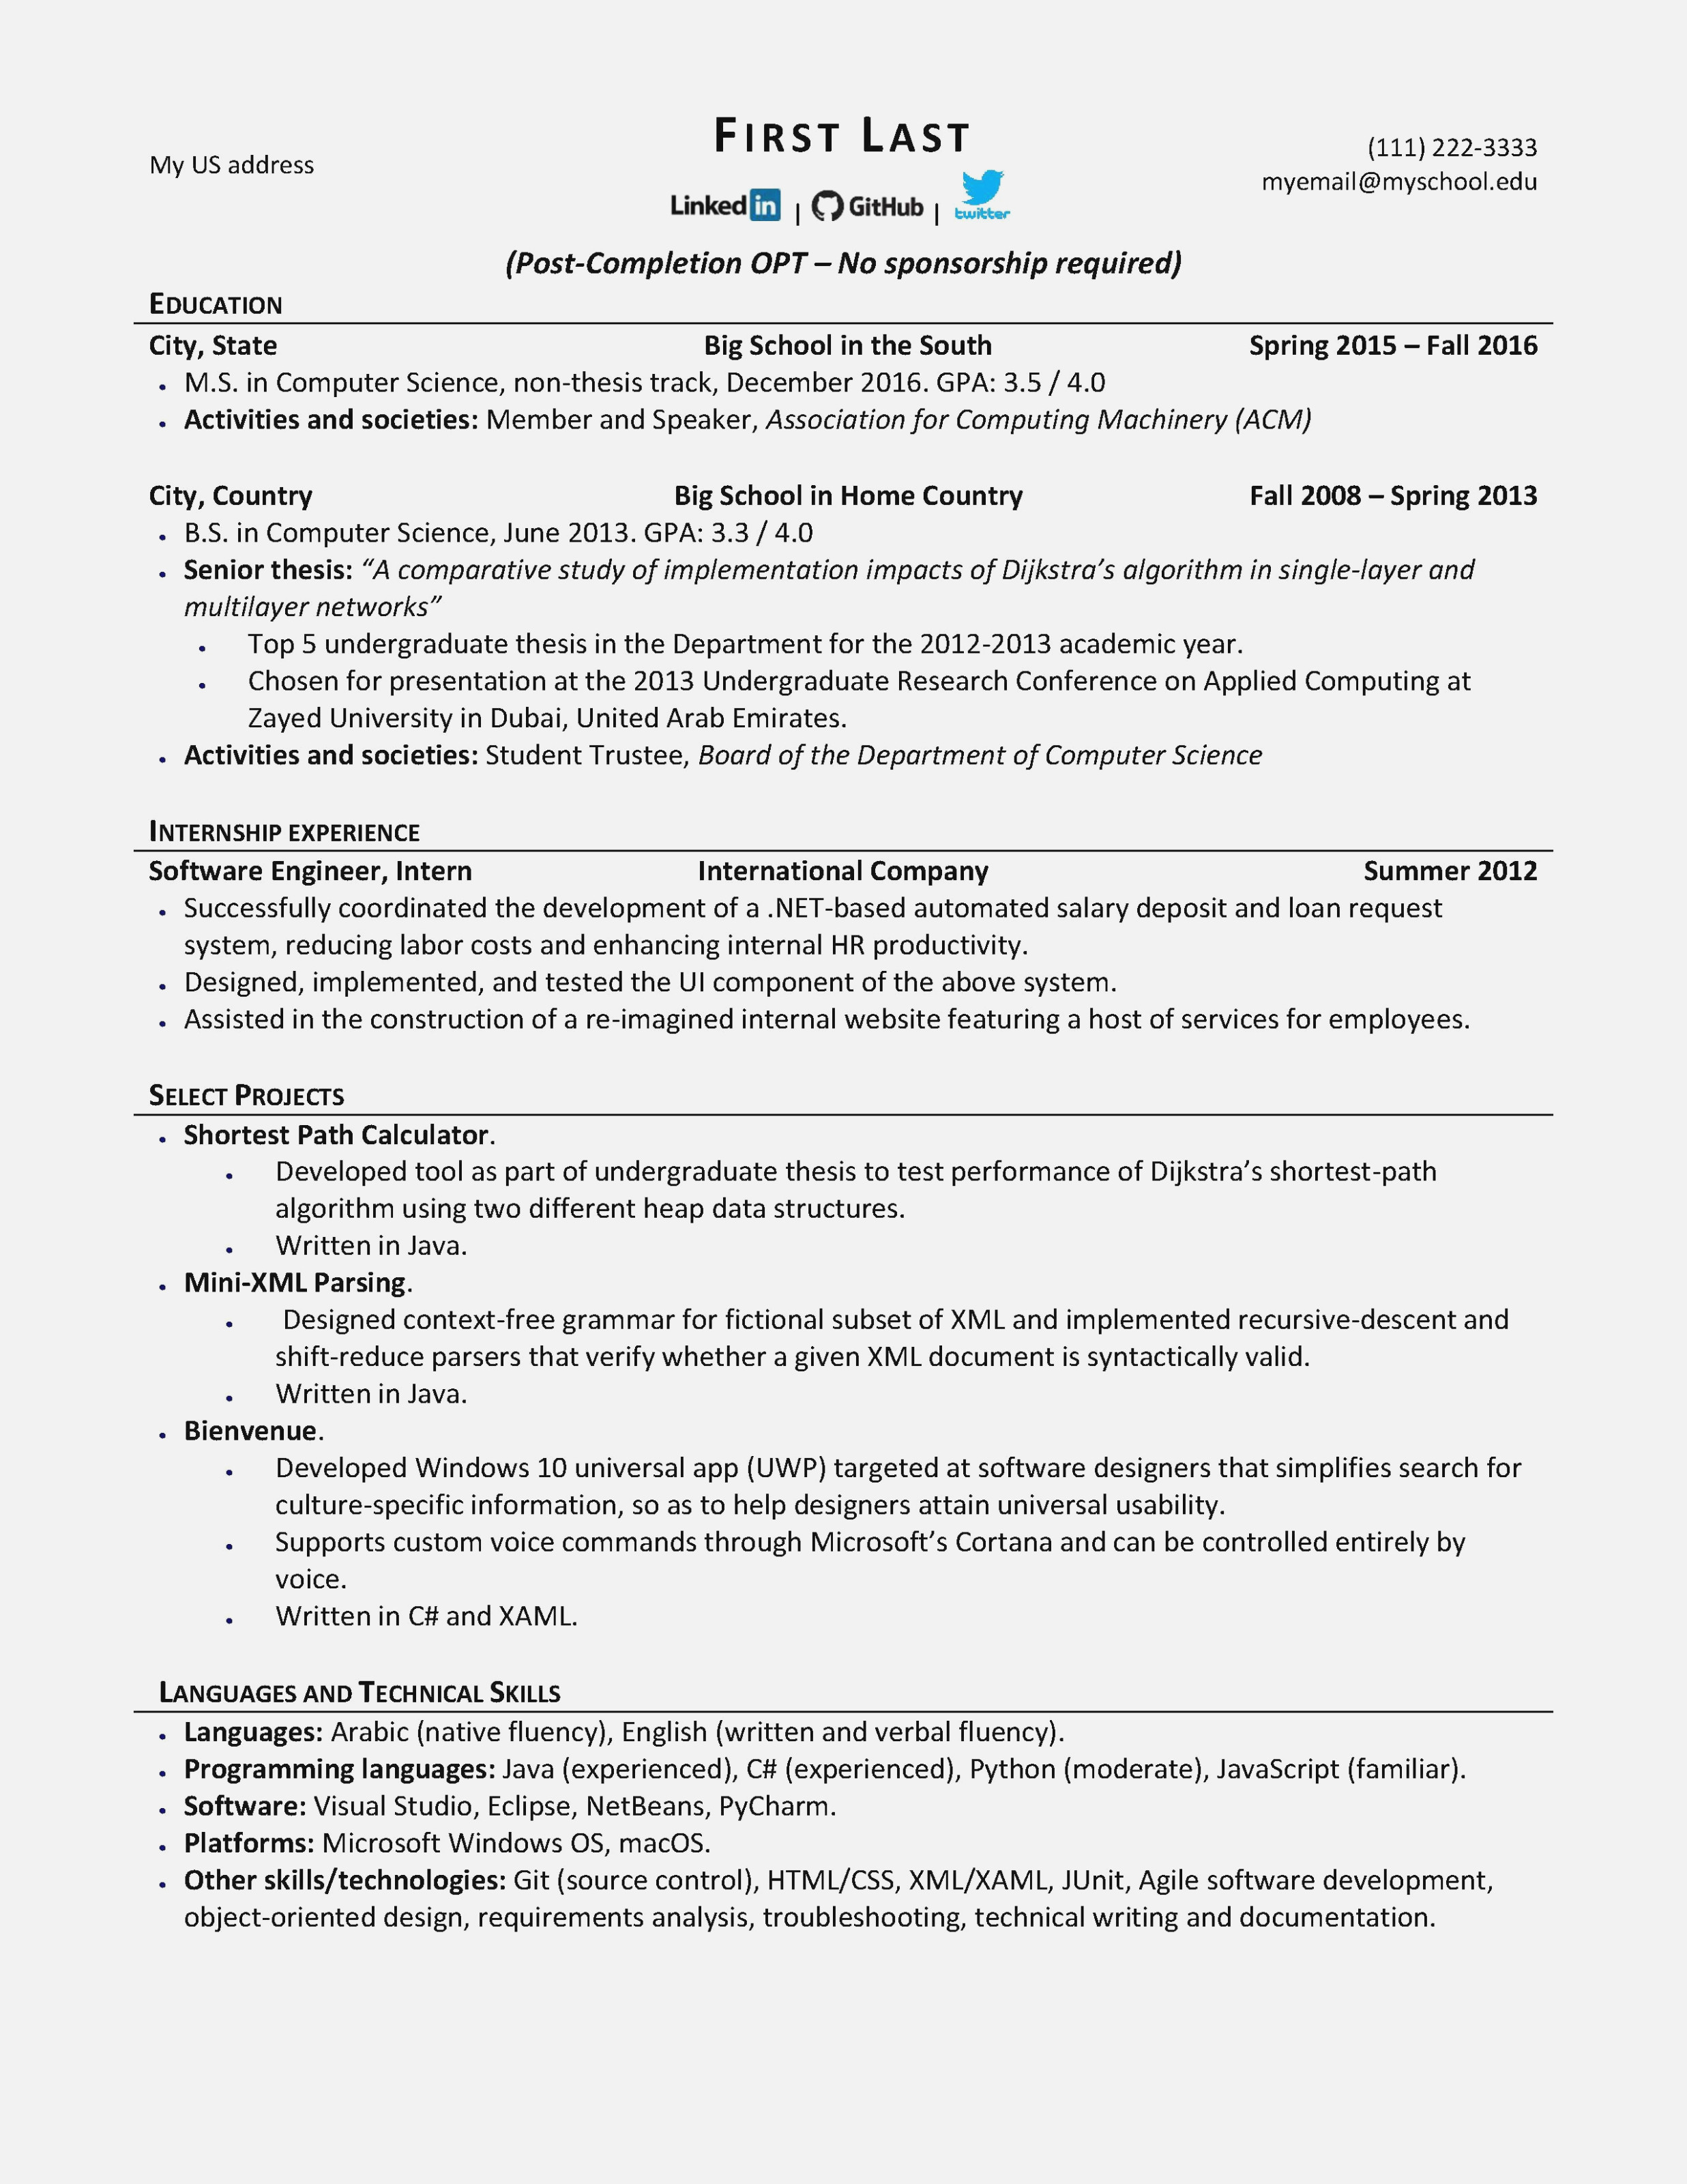 download-free-resume-42-best-resume-templates-2020-reddit-gif